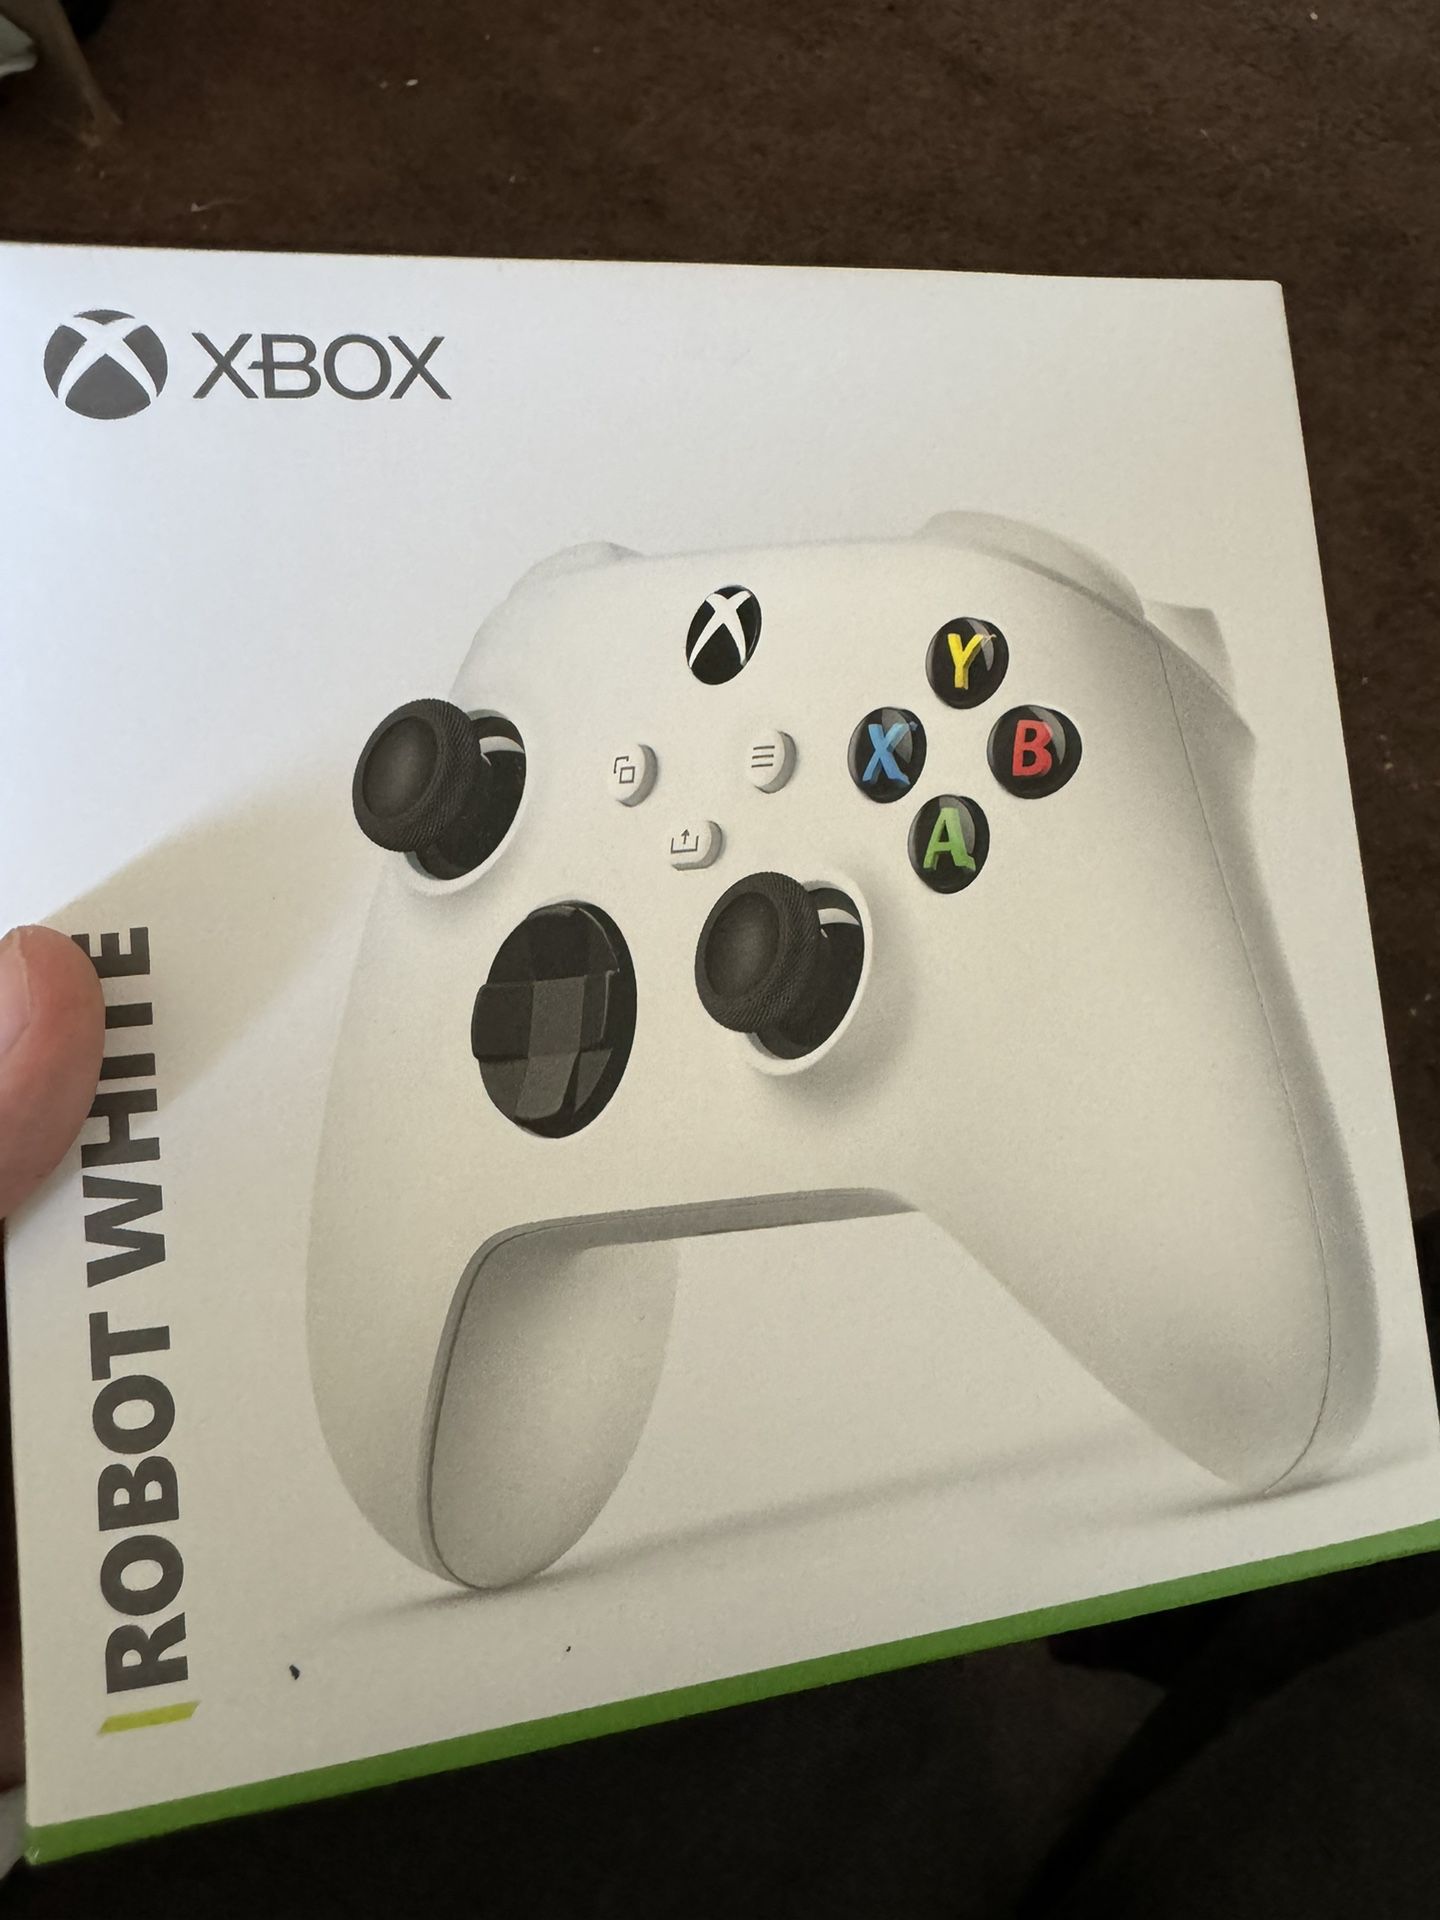 Xbox Wireless Controller (New)